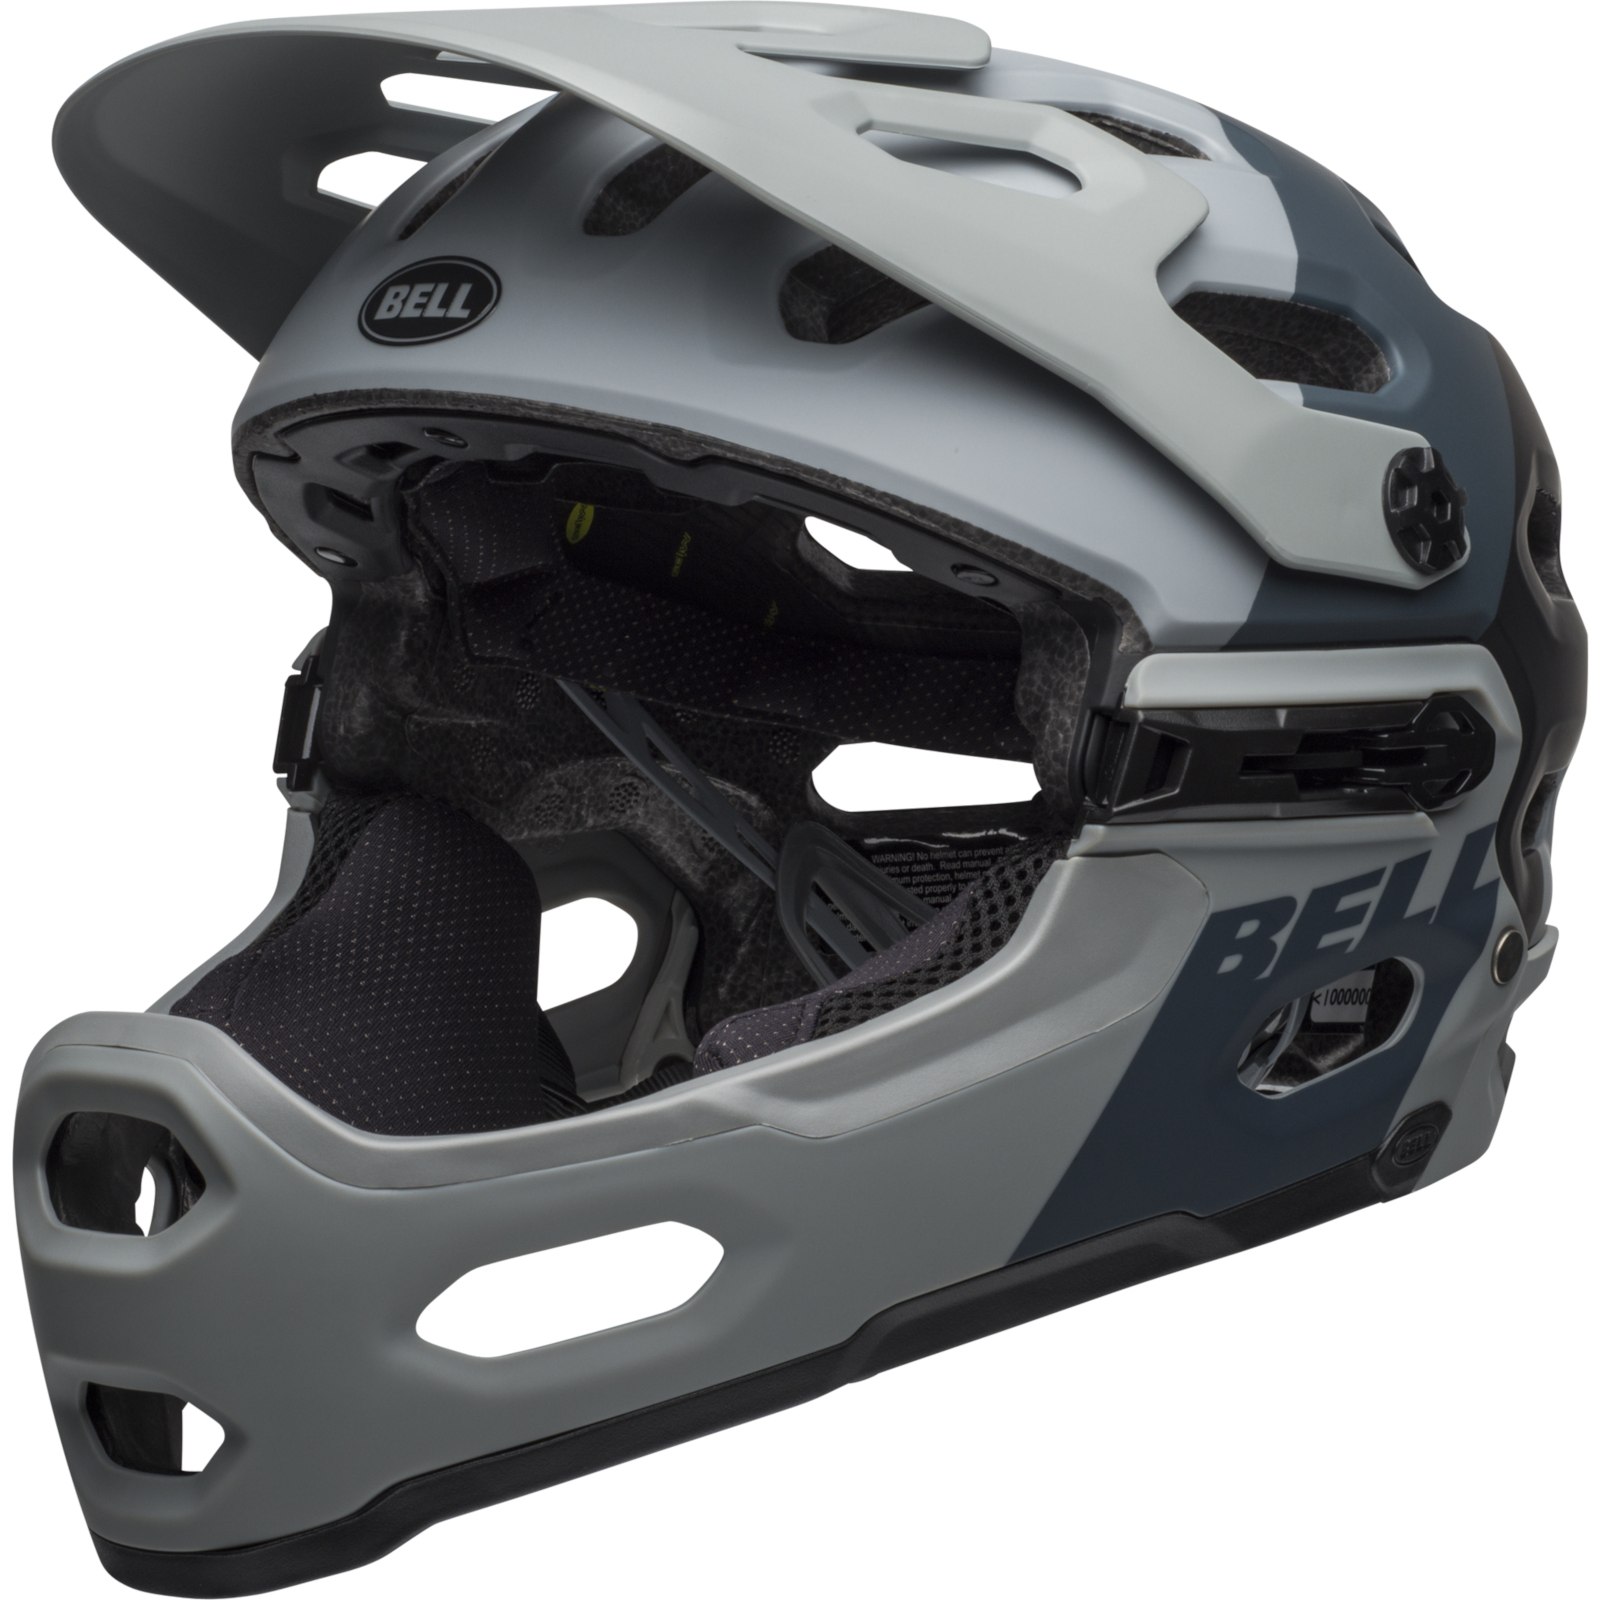 Productfoto van Bell Super 3R MIPS Helm - downdraft matte gray/gunmetal